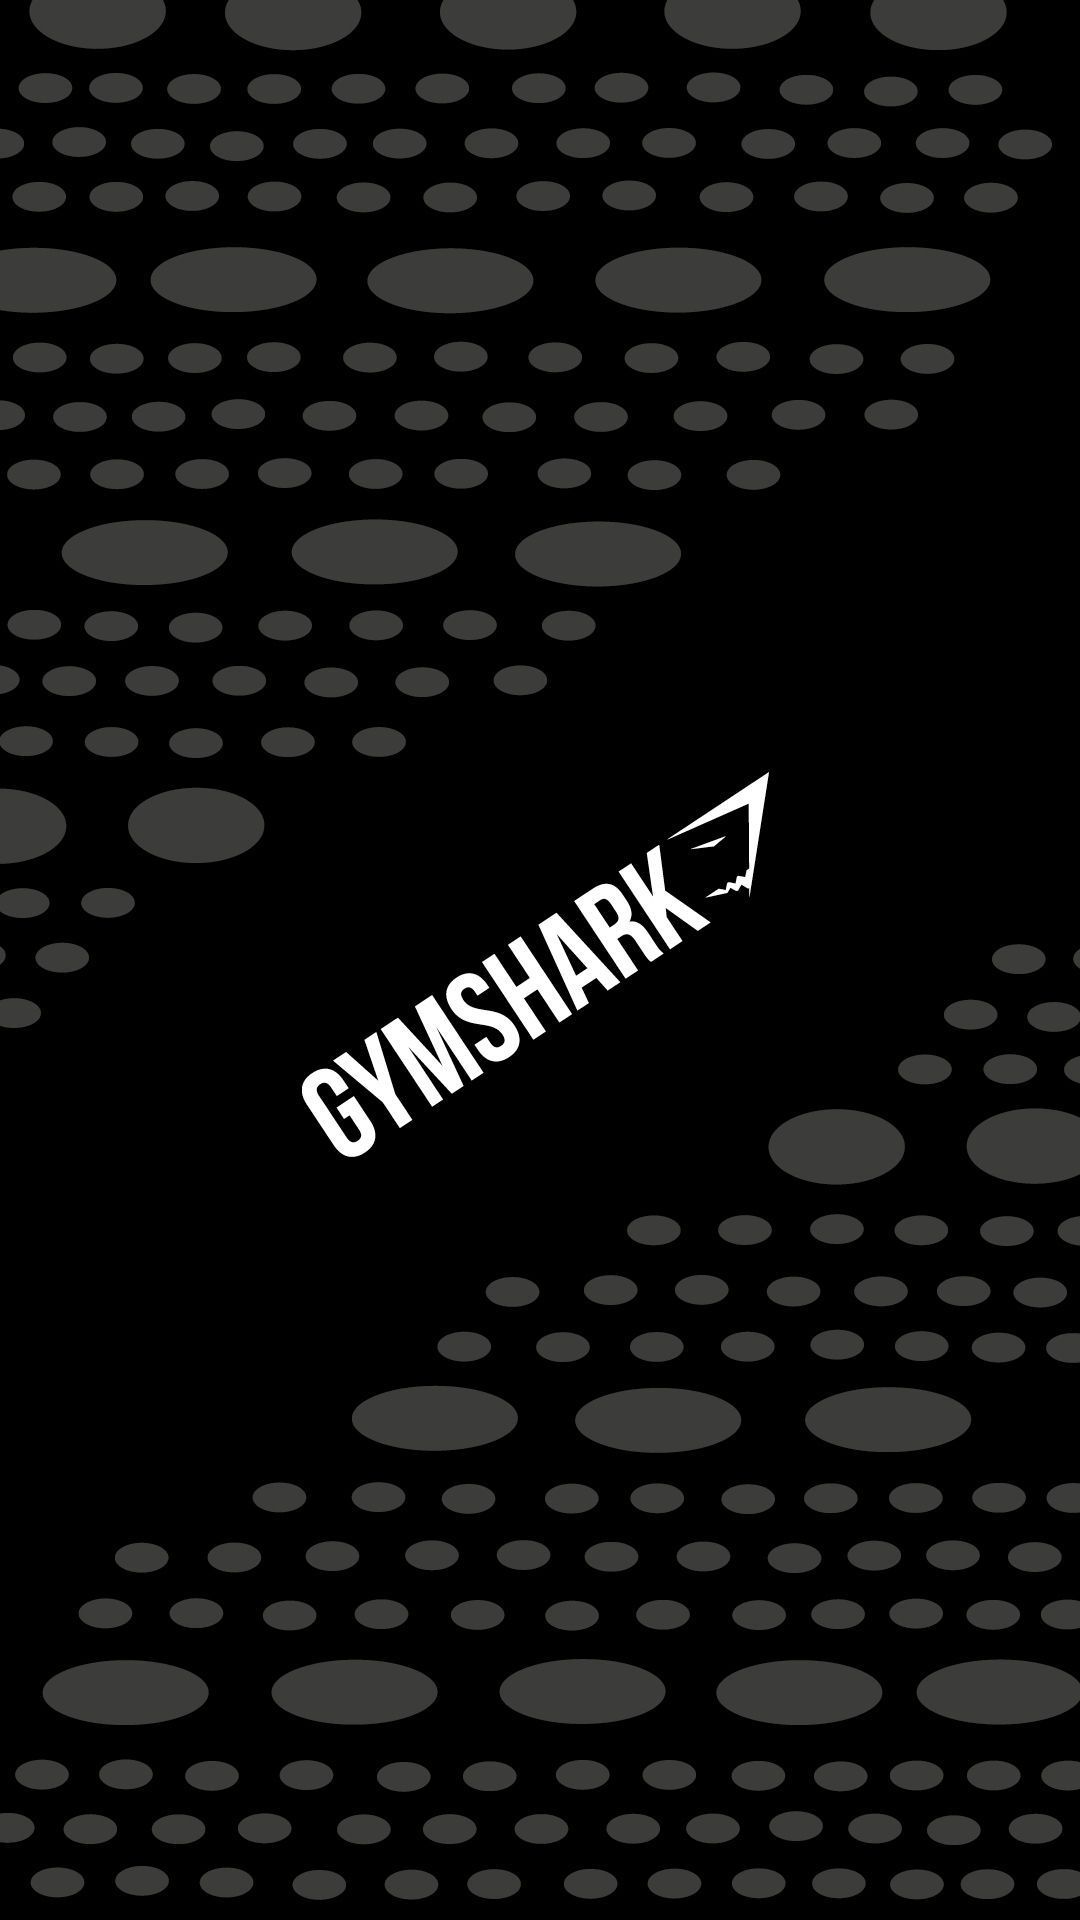 The Official Gymshark wallpaper. Flawless, Black. #Gymshark